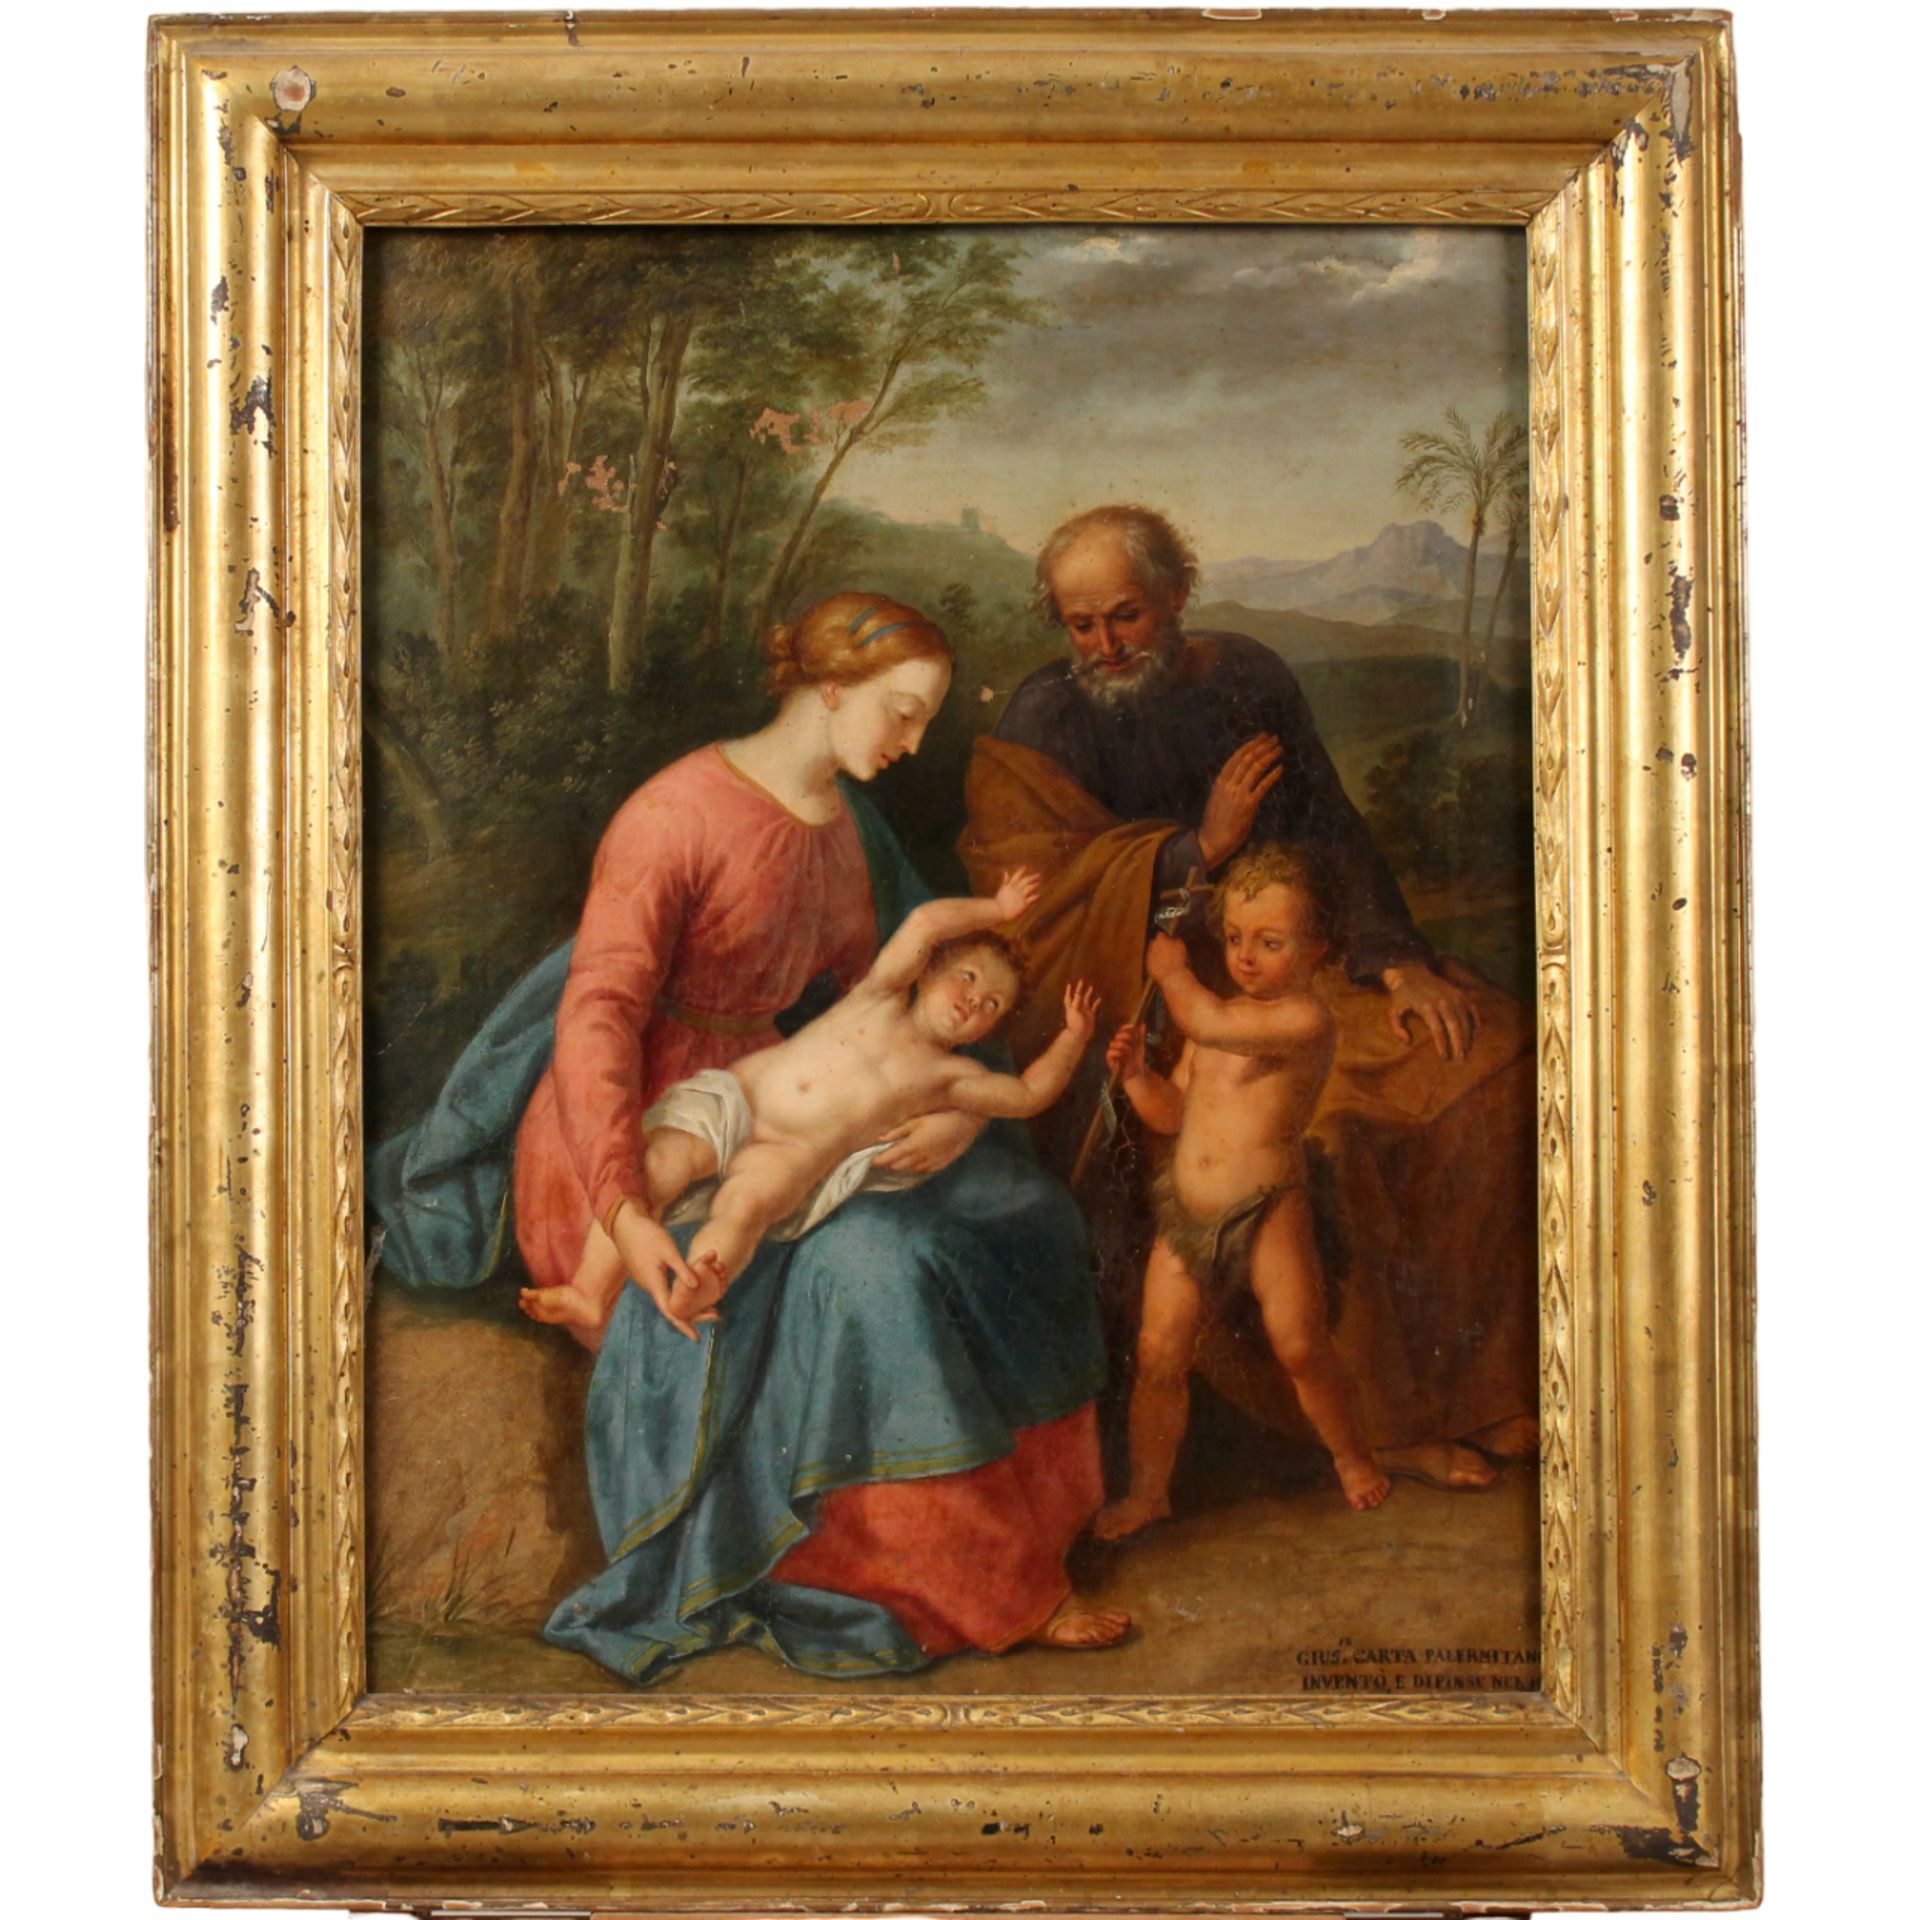 Giuseppe Carta (1809/1889) "La Sacra Famiglia con San Giovannino" - "The Holy Family with the infant